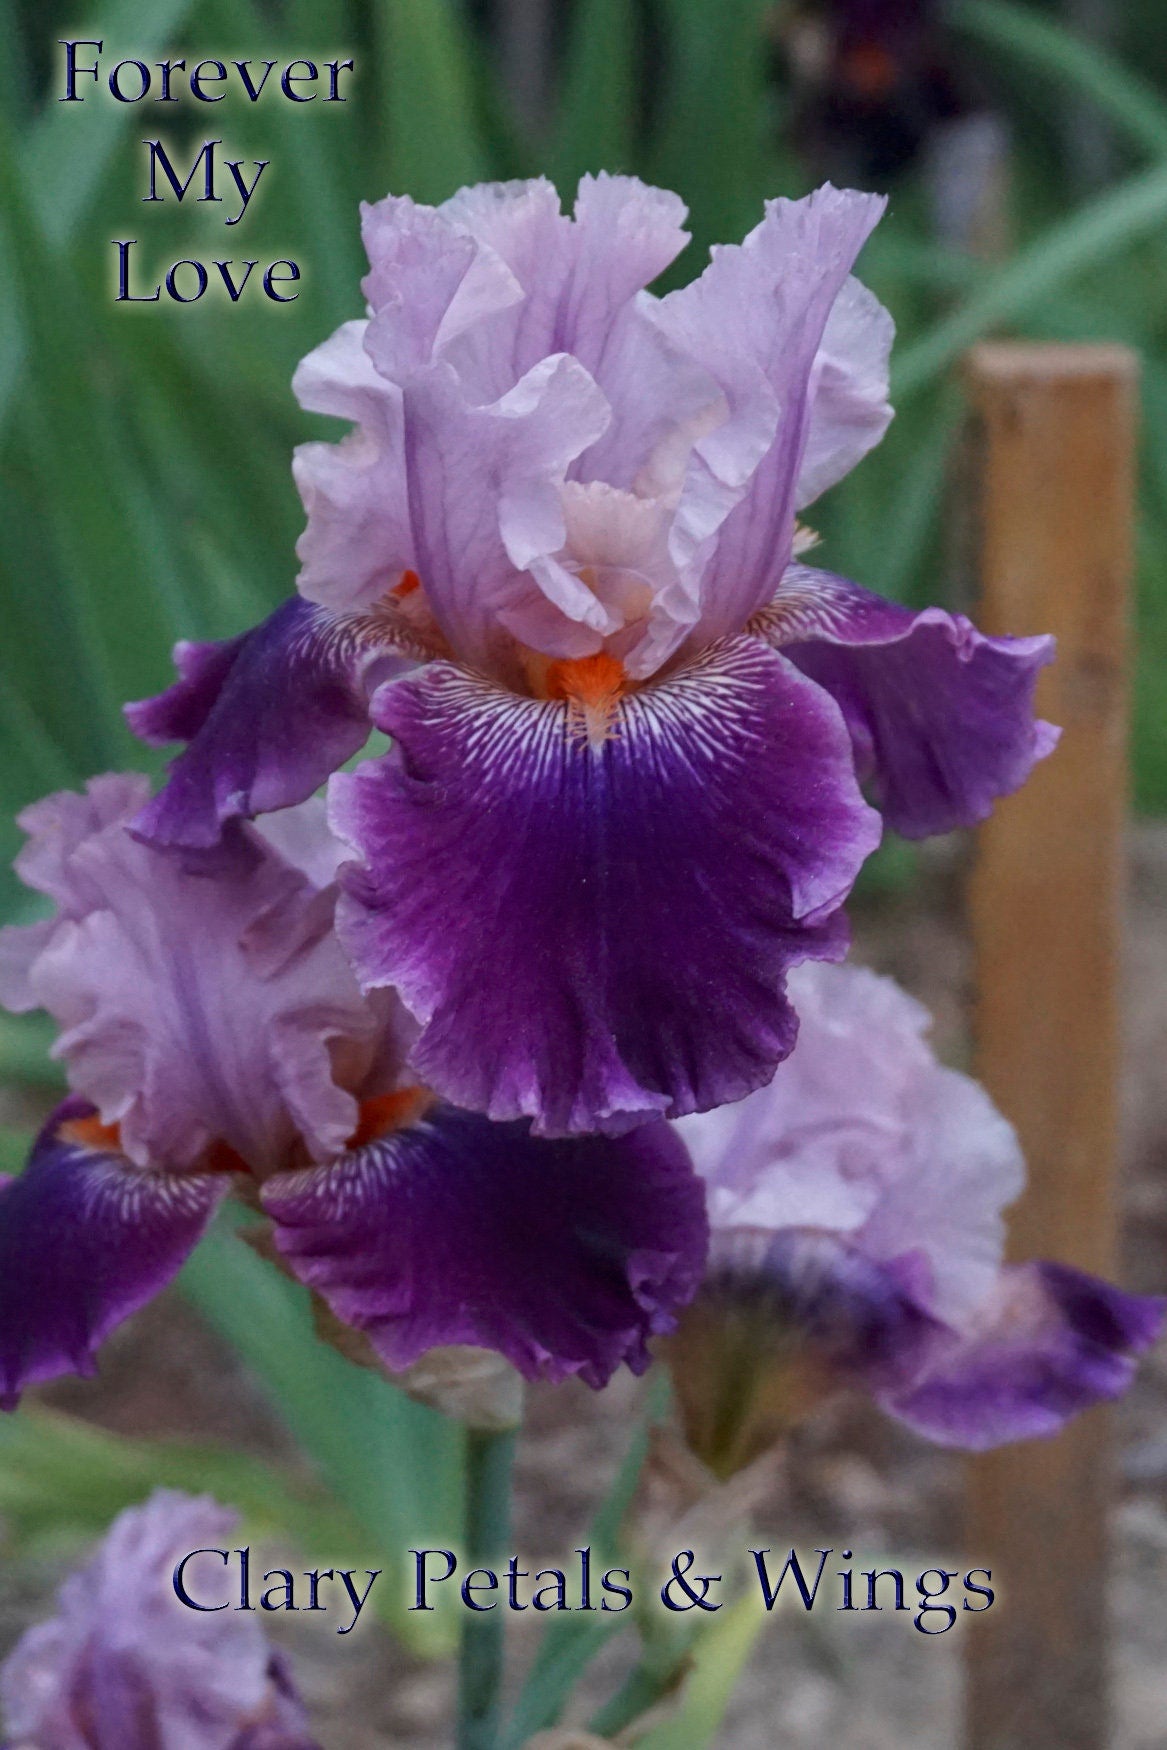 FOREVER MY LOVE 2015 - Tall Bearded Iris - Ruffled garden standout